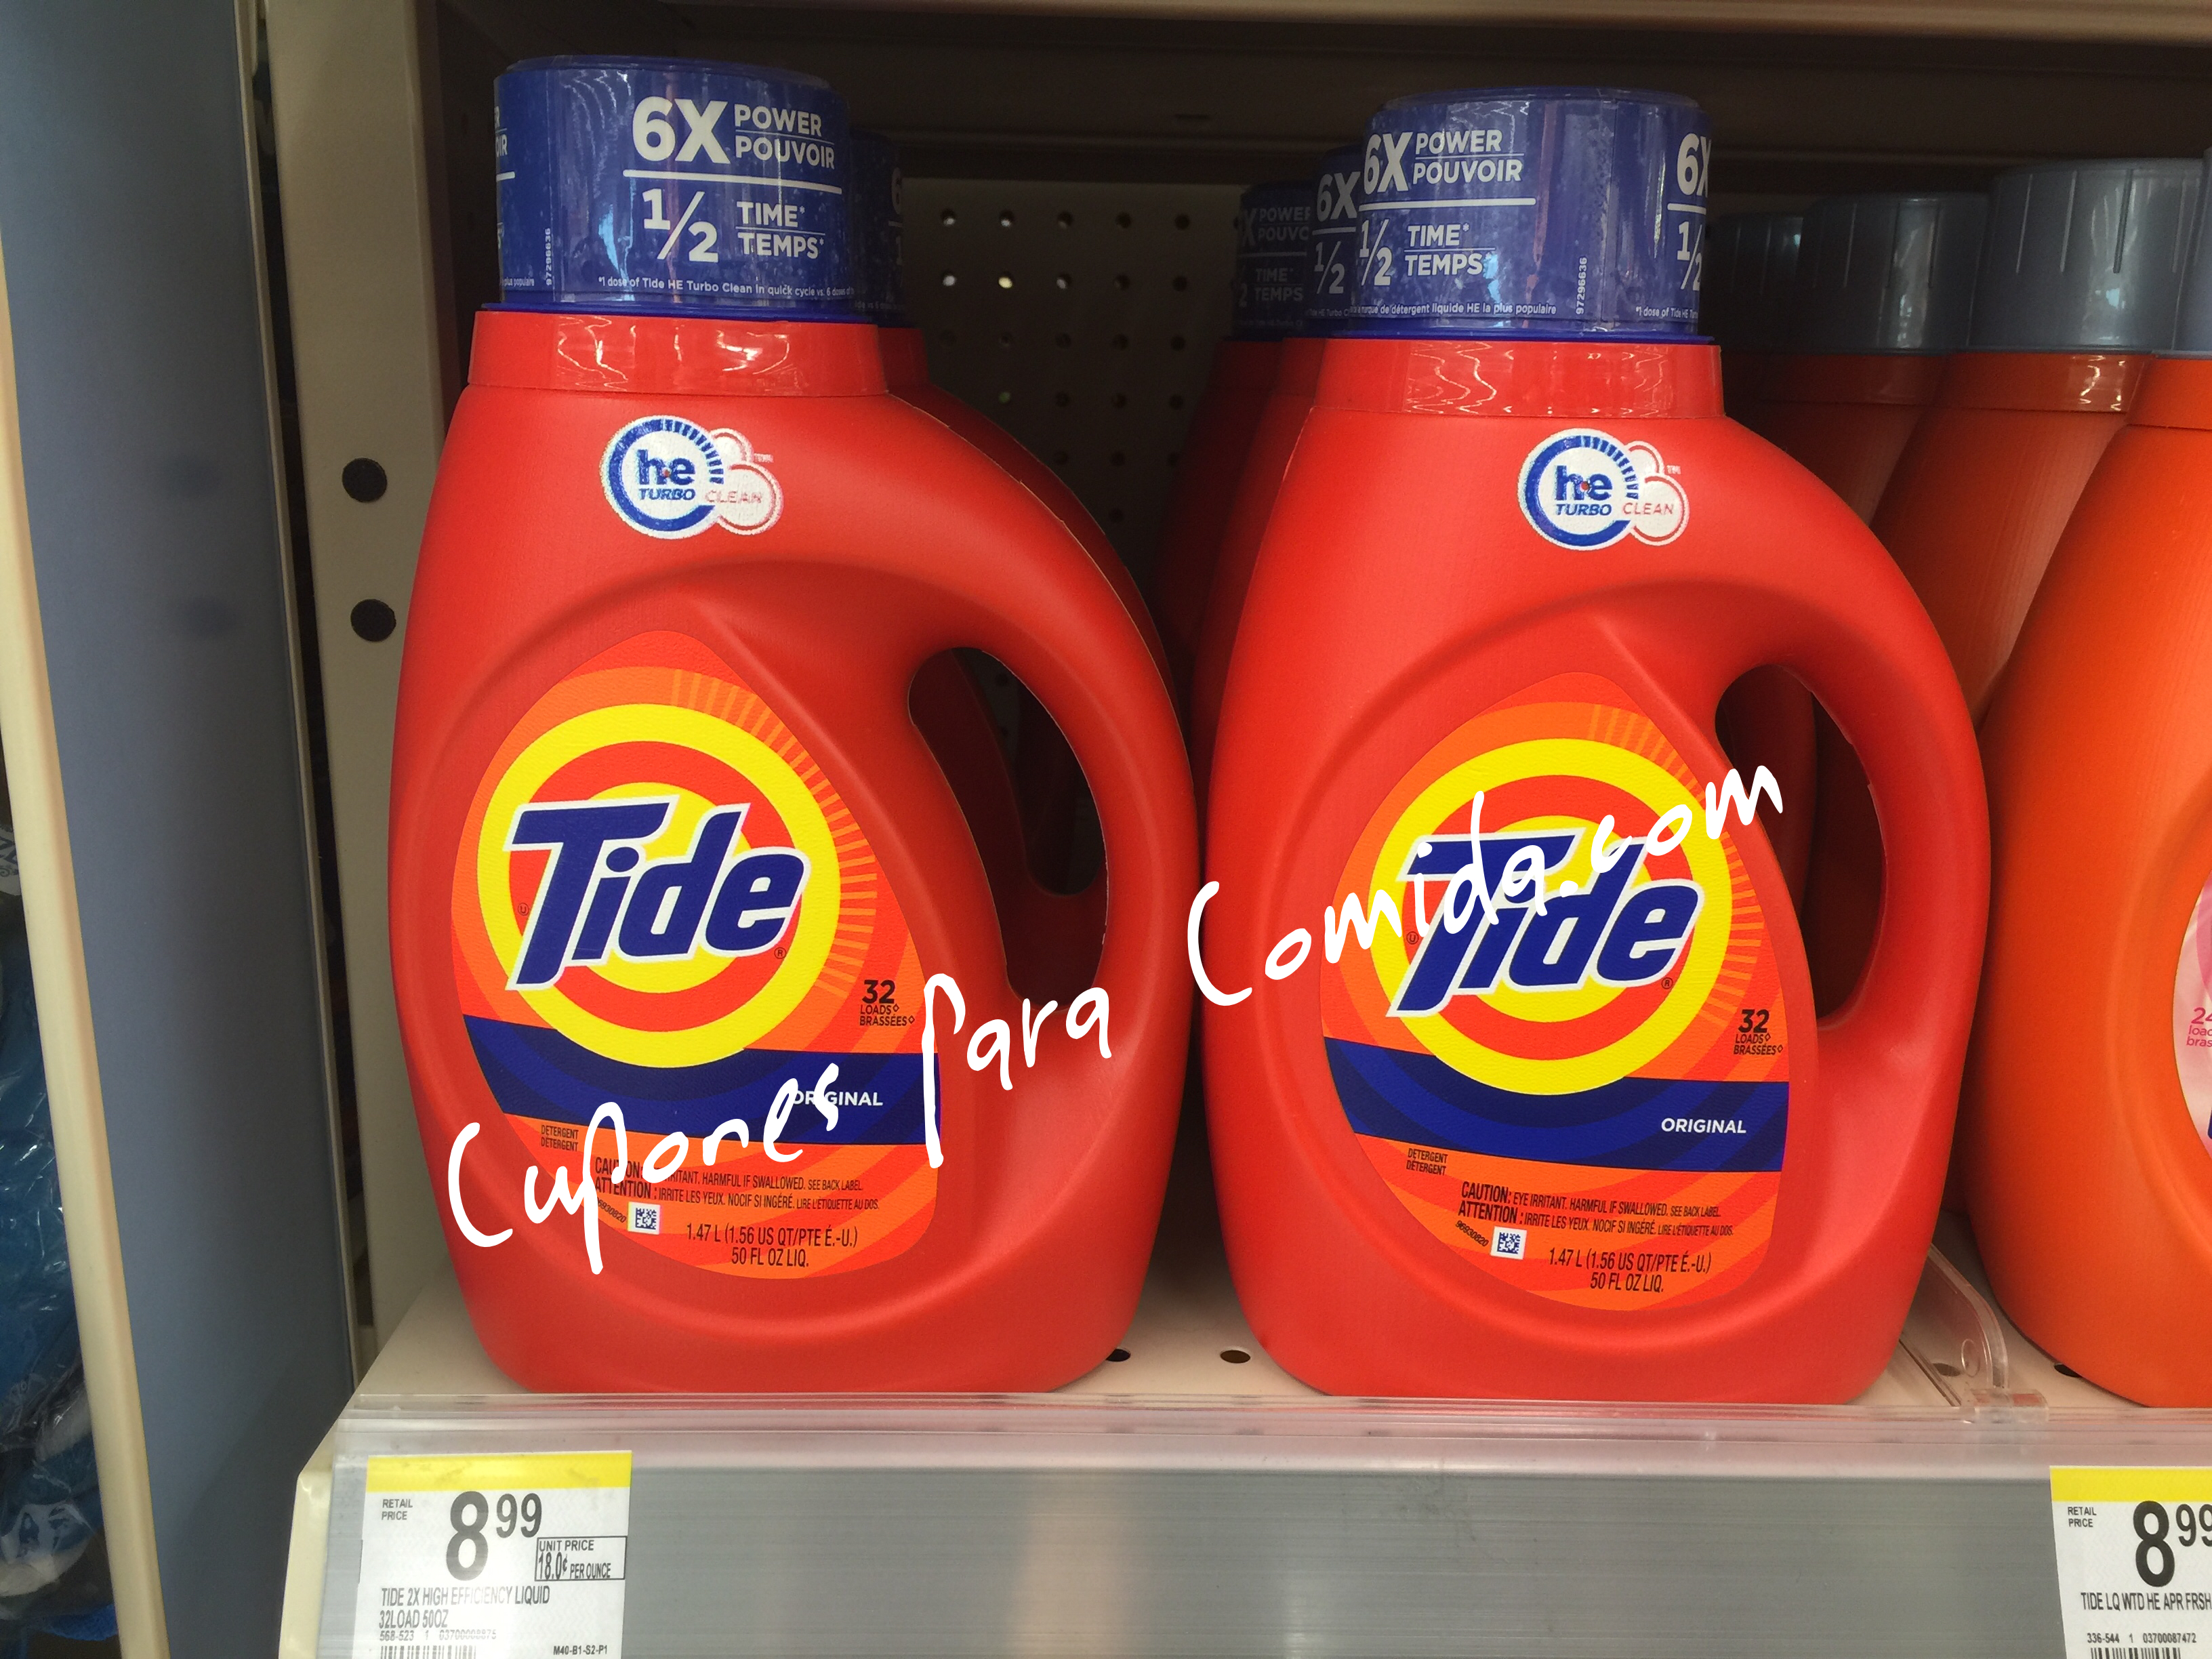 Tide Liquid Detergent 32 Loads 10/22/15